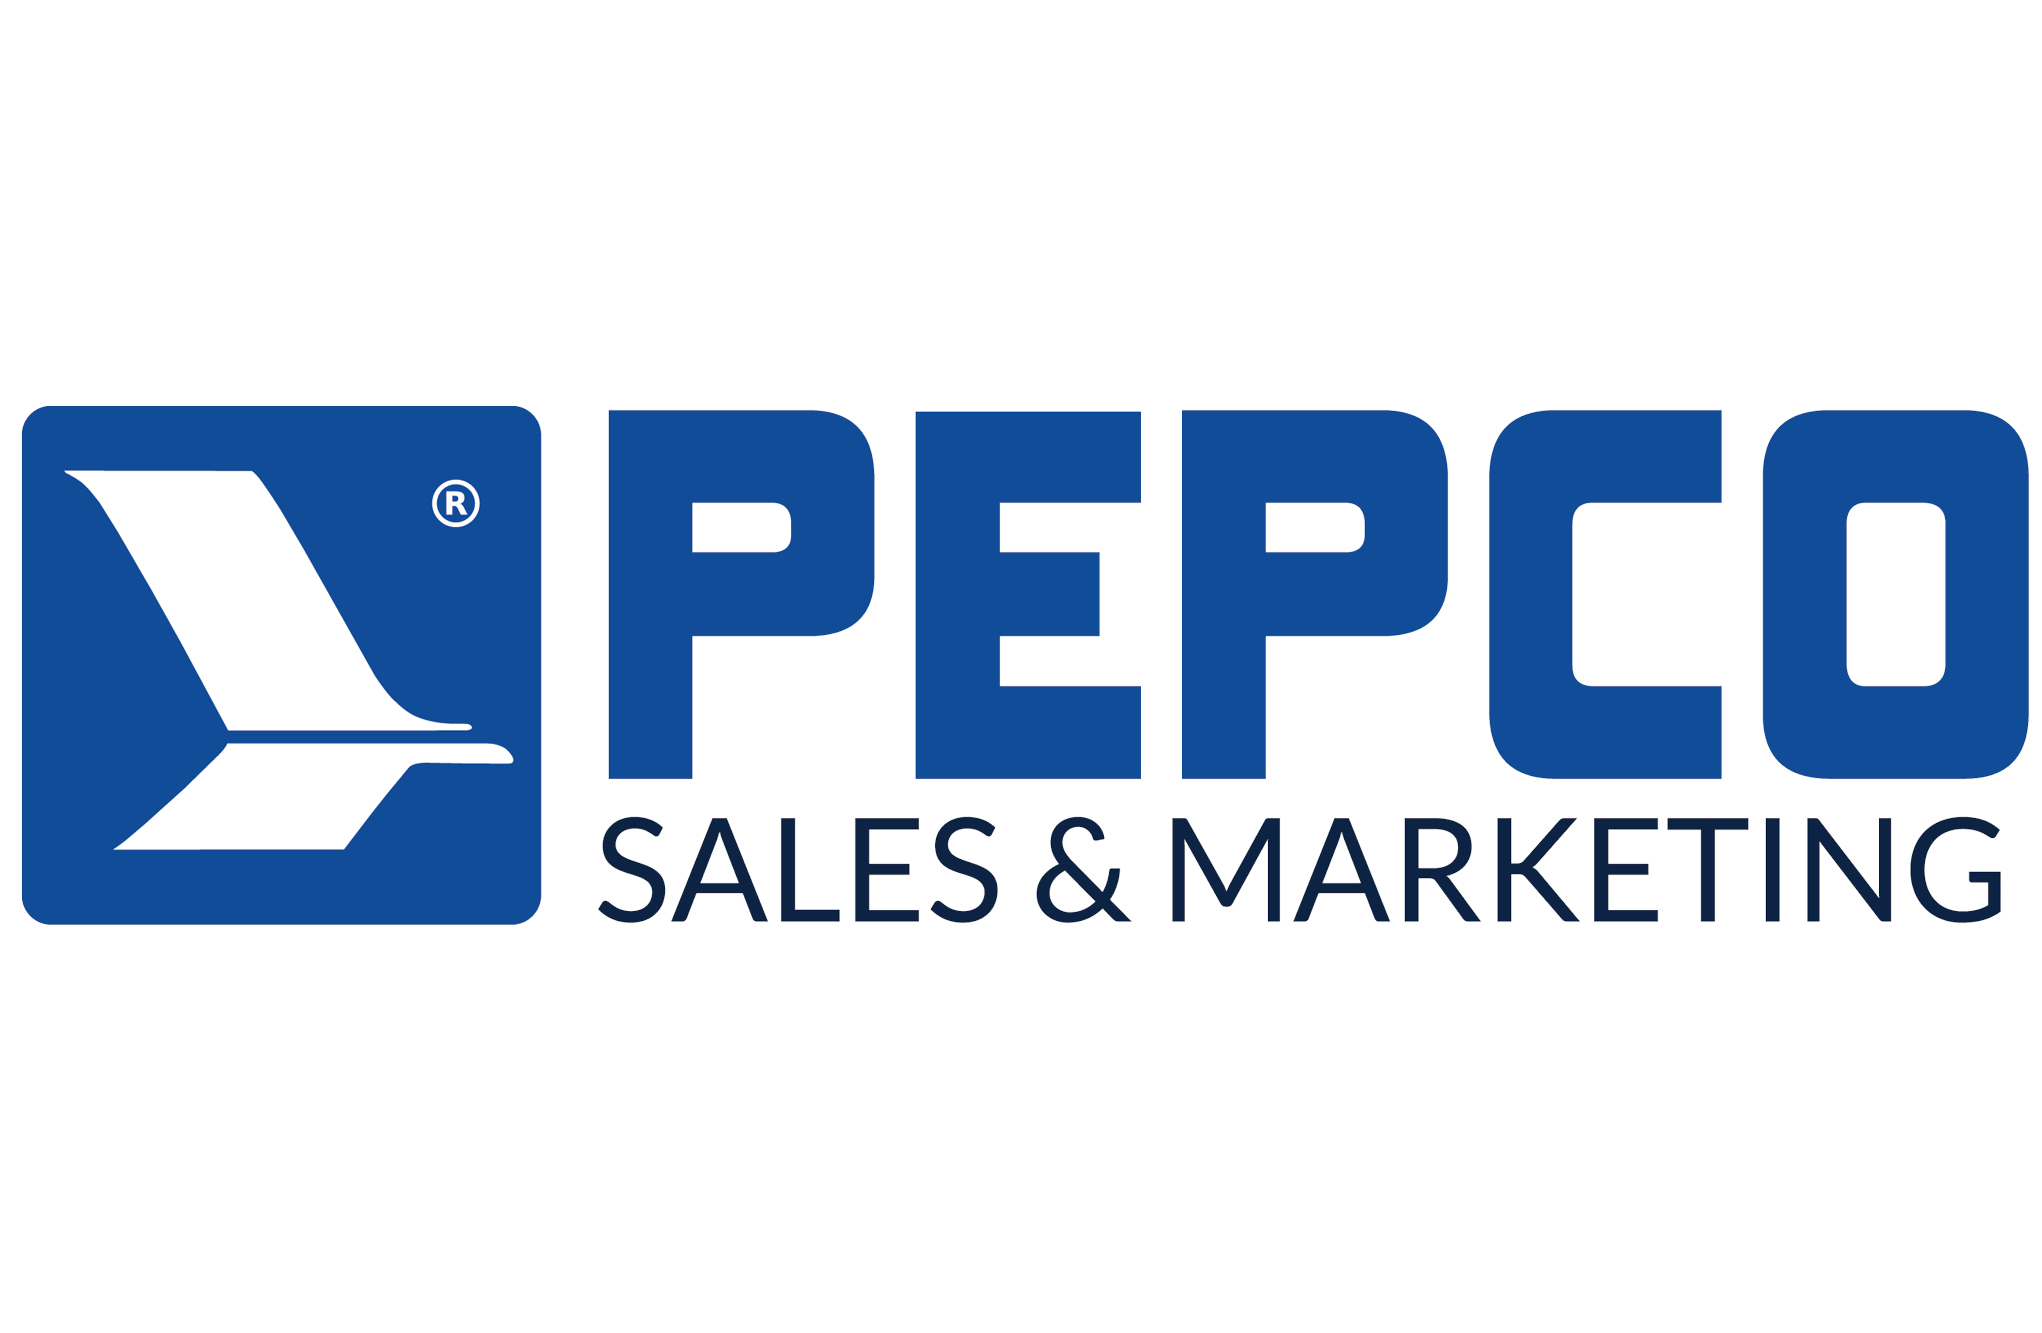 Pepco Sales & Marketing